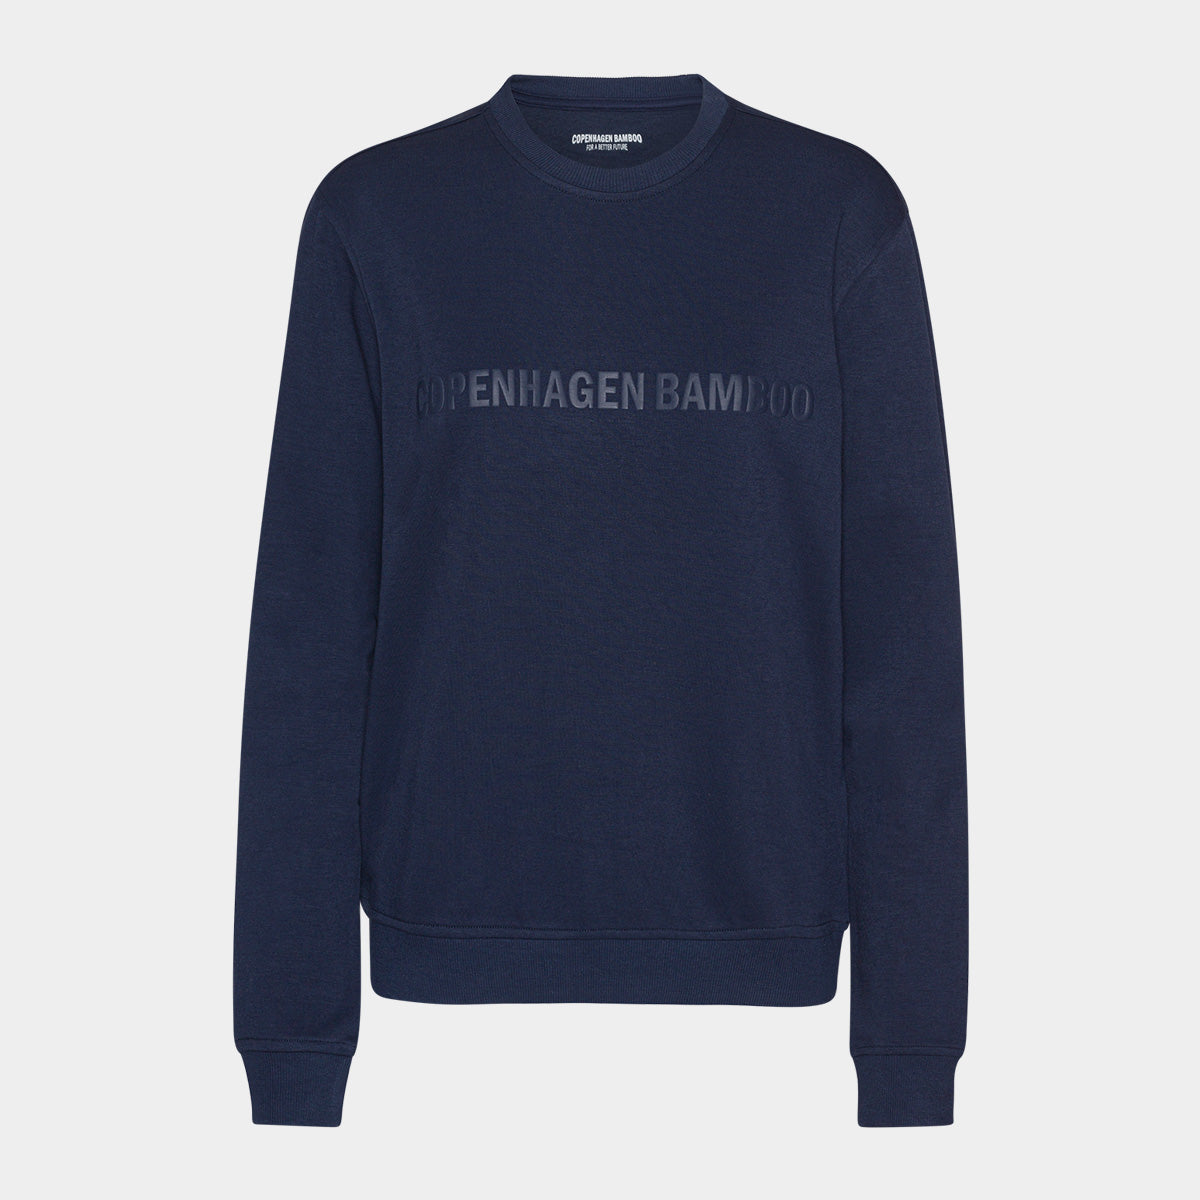 Se Navy bambus sweatshirt til mænd med logo fra Copenhagen Bamboo, M hos Bambustøj.dk